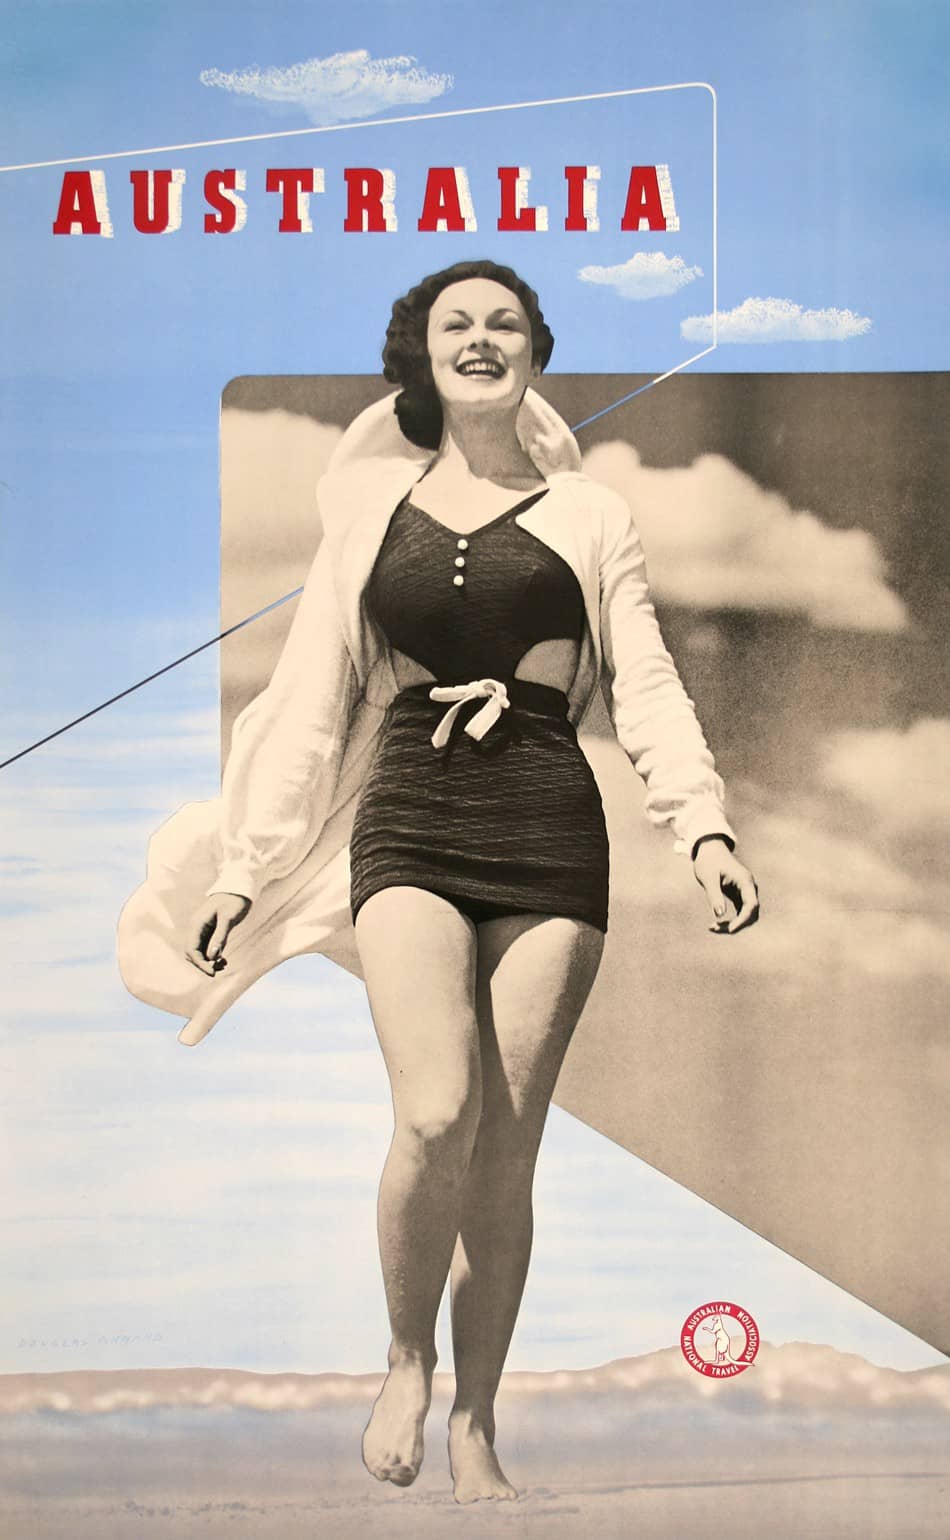 Australia Woman on Beach Original Poster c1937 by Douglas Annand